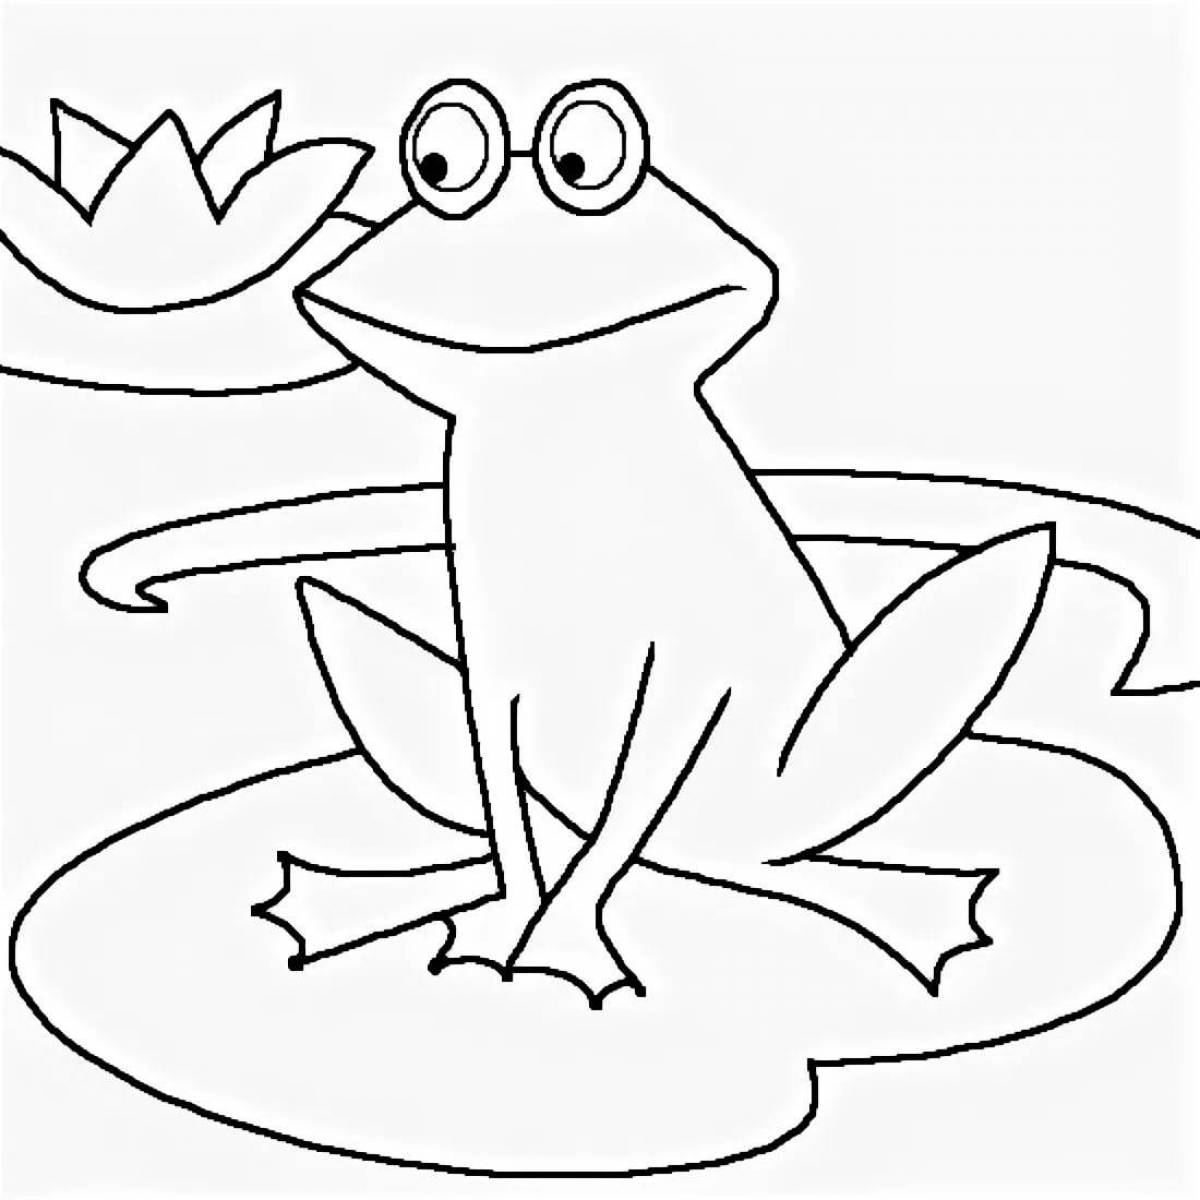 The brave traveler frog